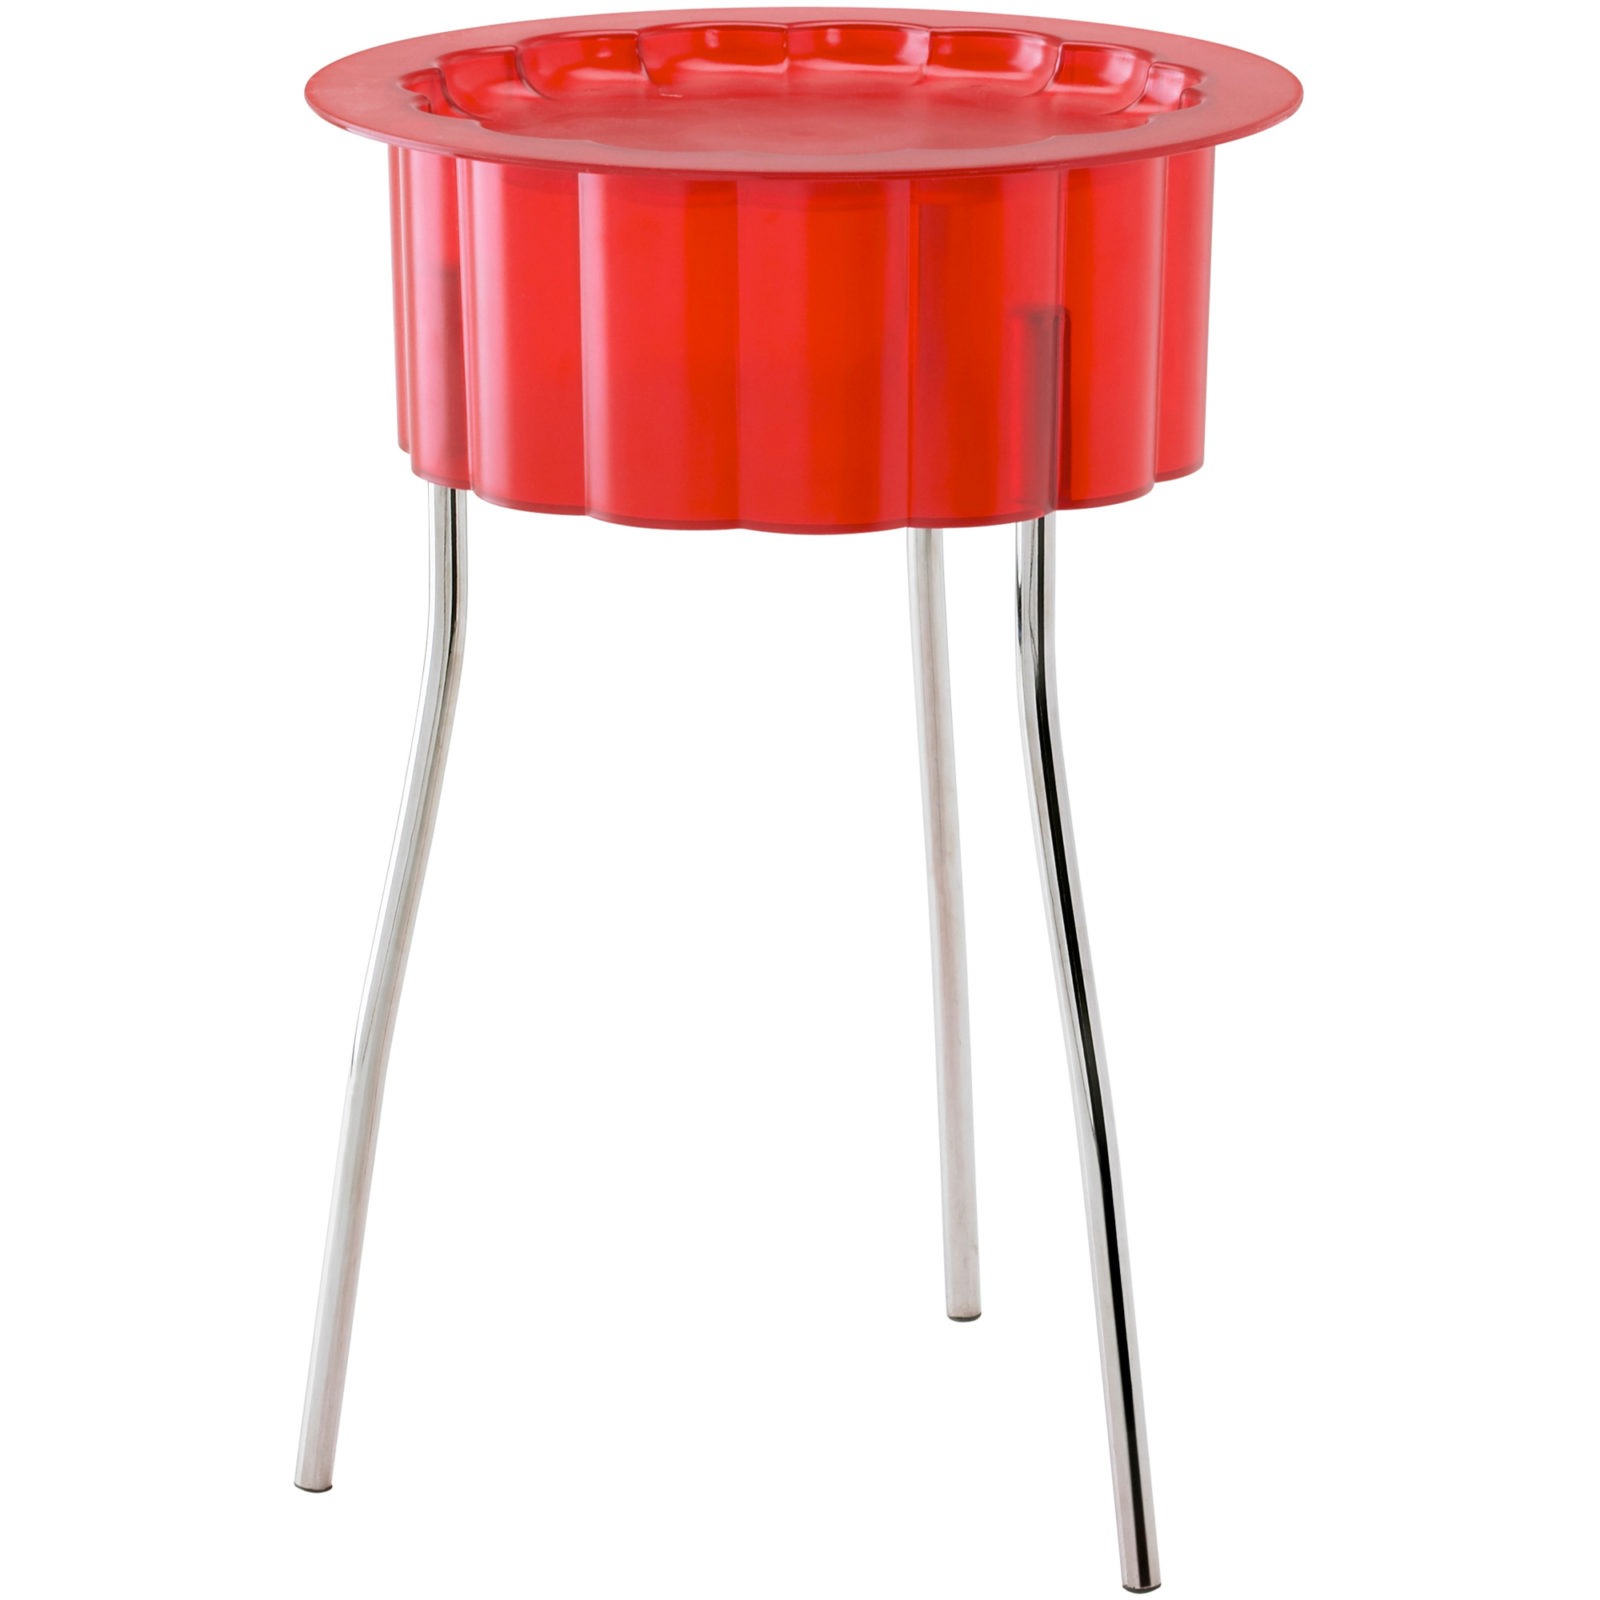 A small red side table, HATTEN, looking like an upside-down hat on legs.